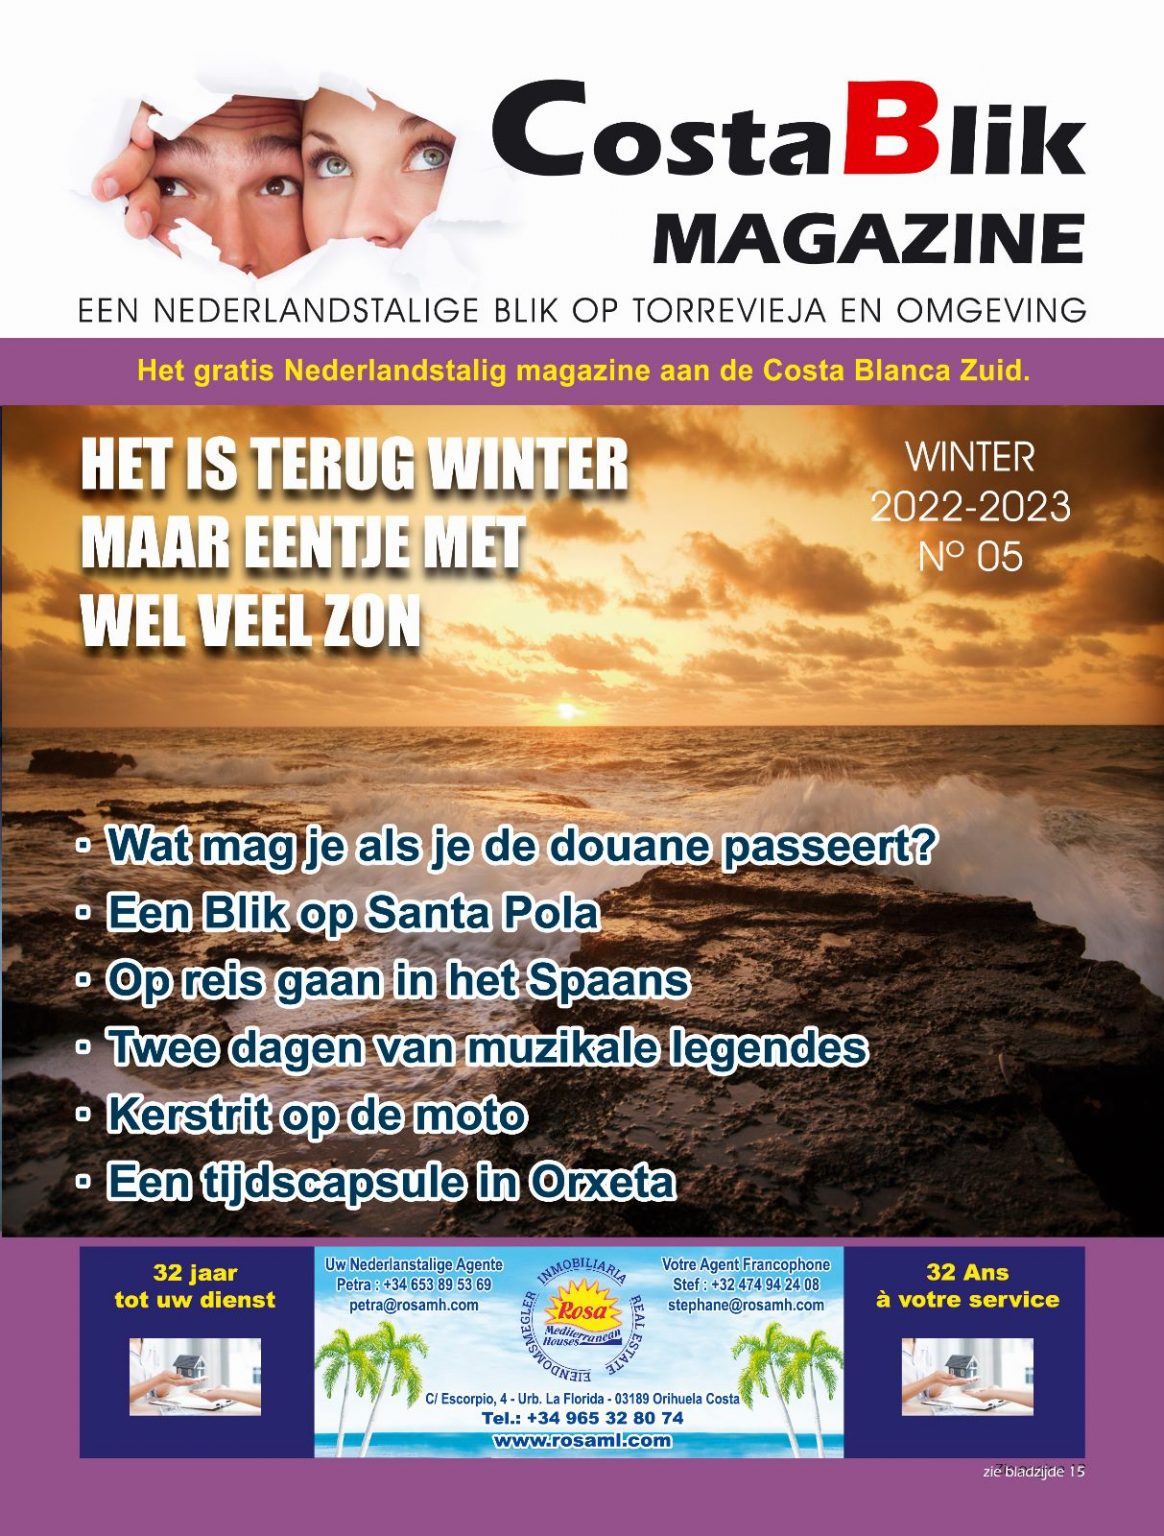 Costablik Magazine Winter 2023